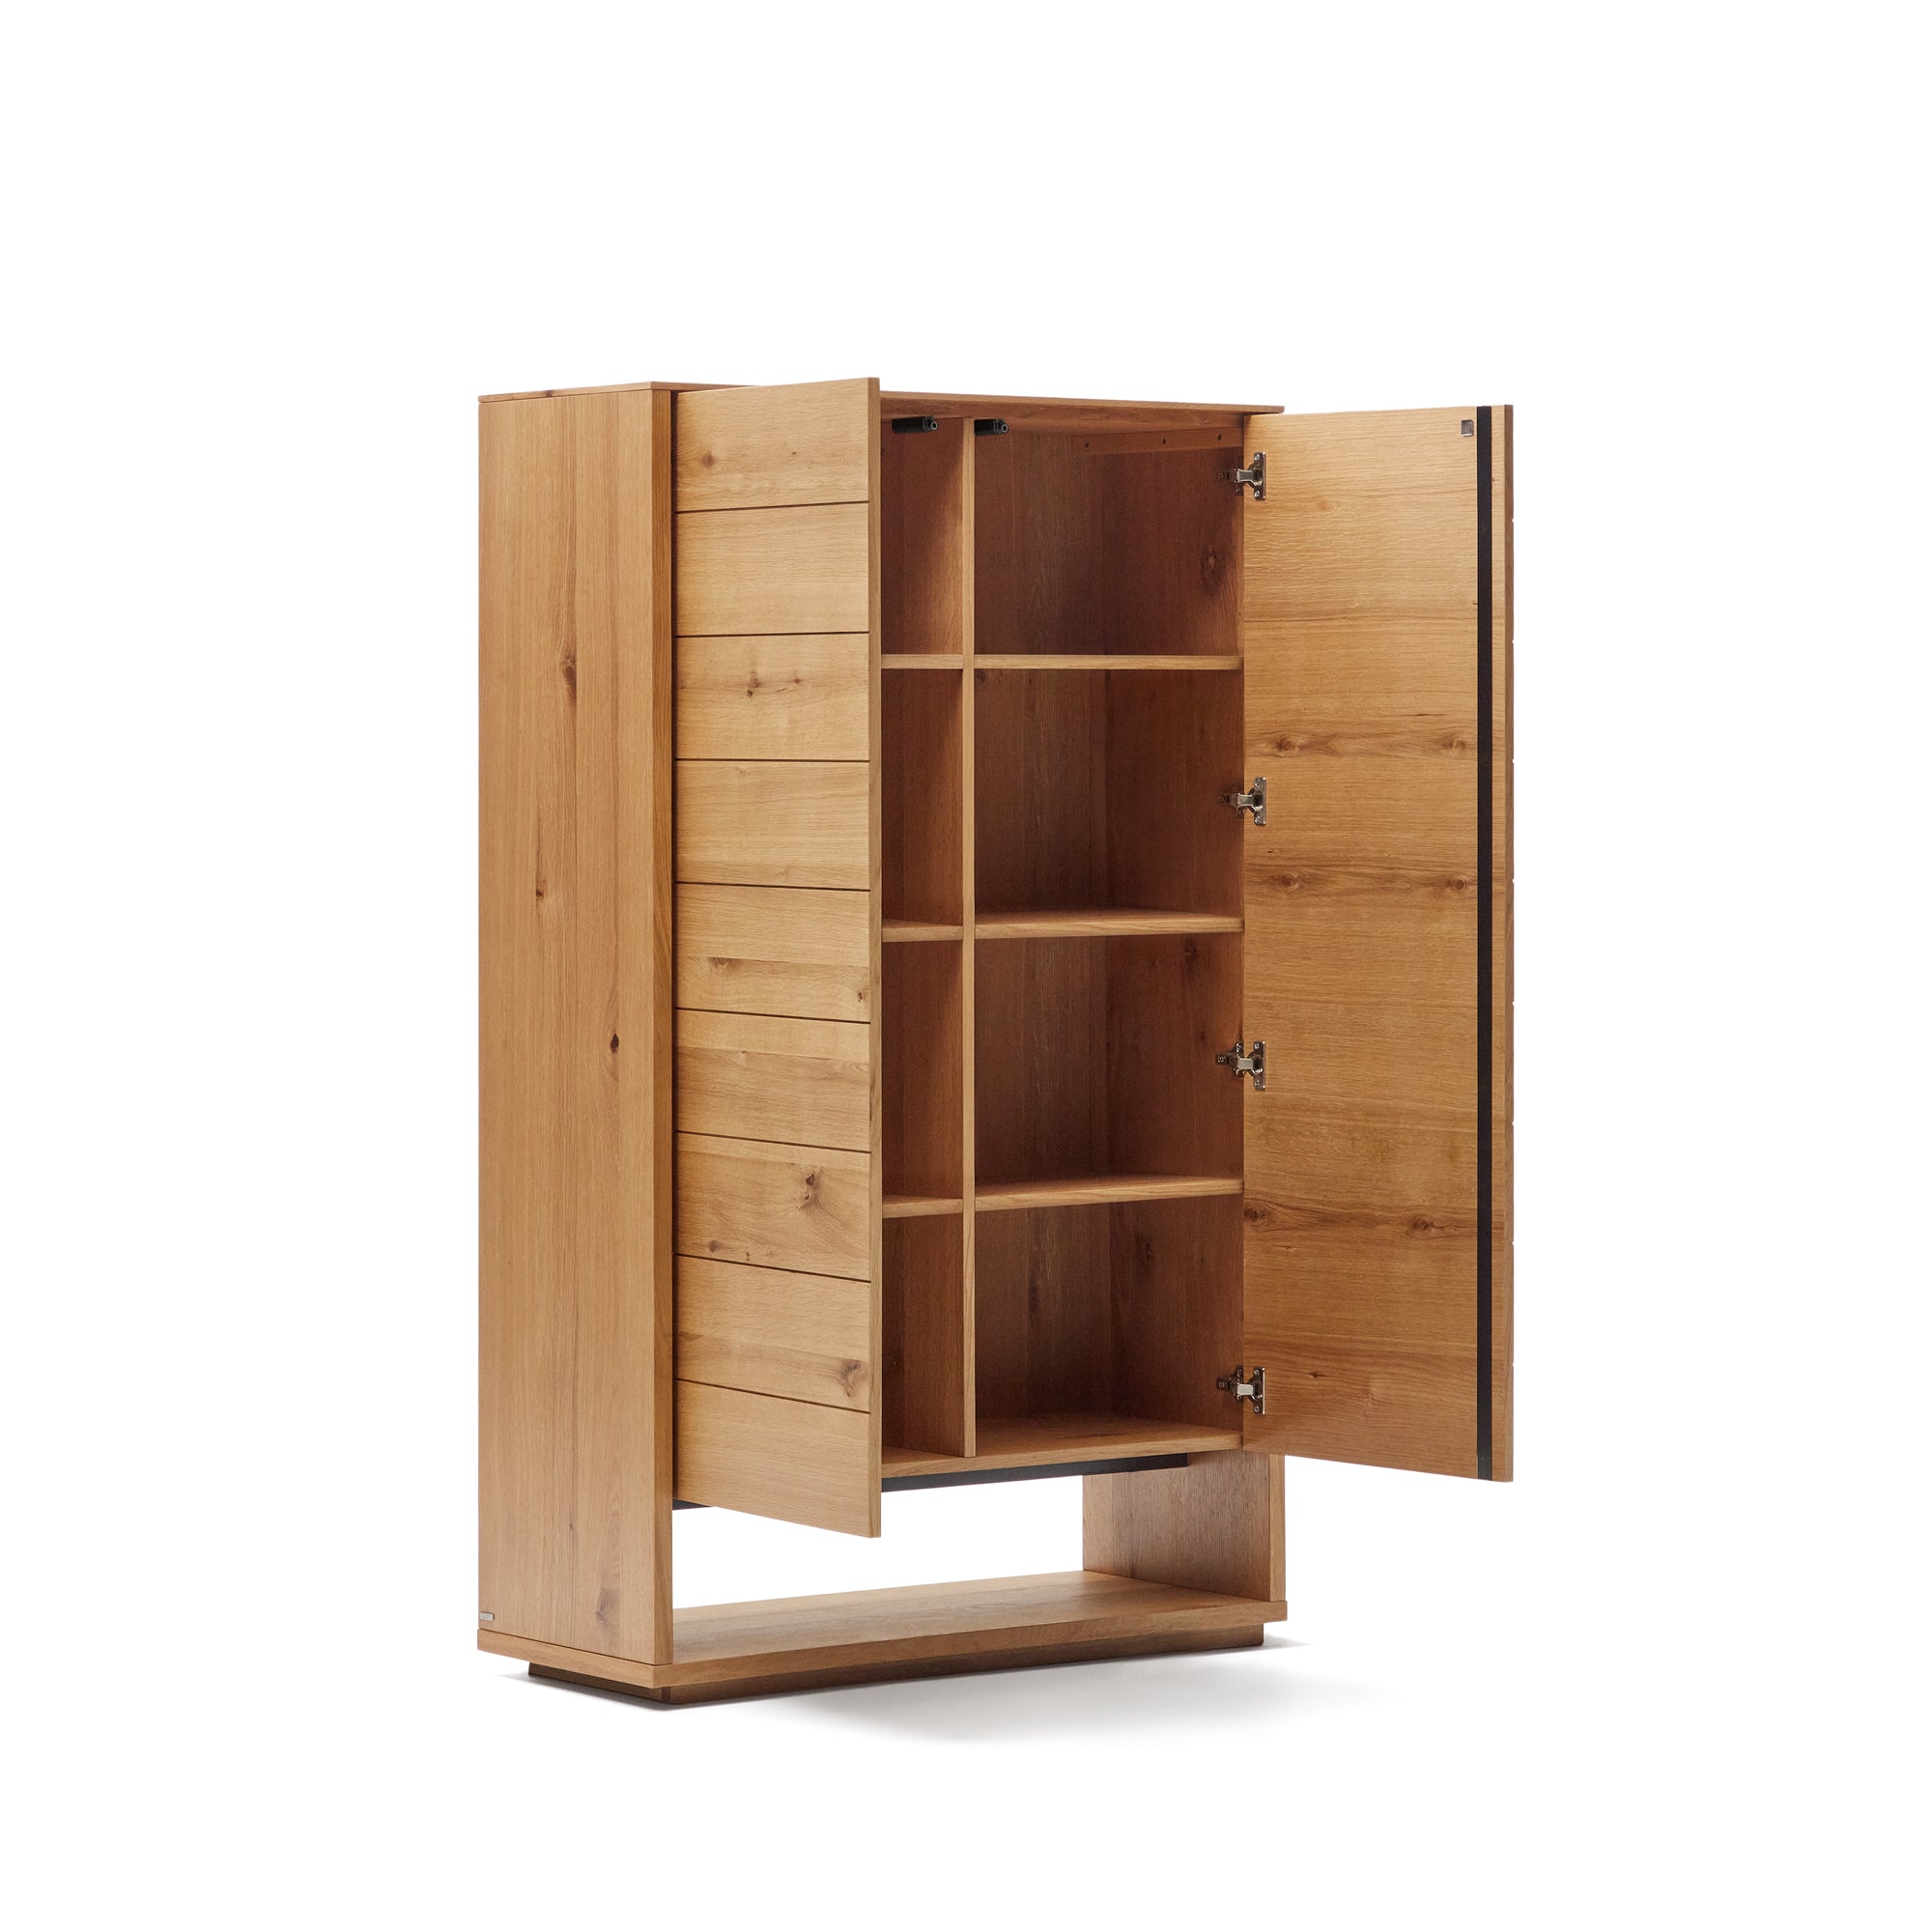 Alguema tall sideboard with 2 doors in oak wood veneer with natural finish, 100 x 163,5 cm